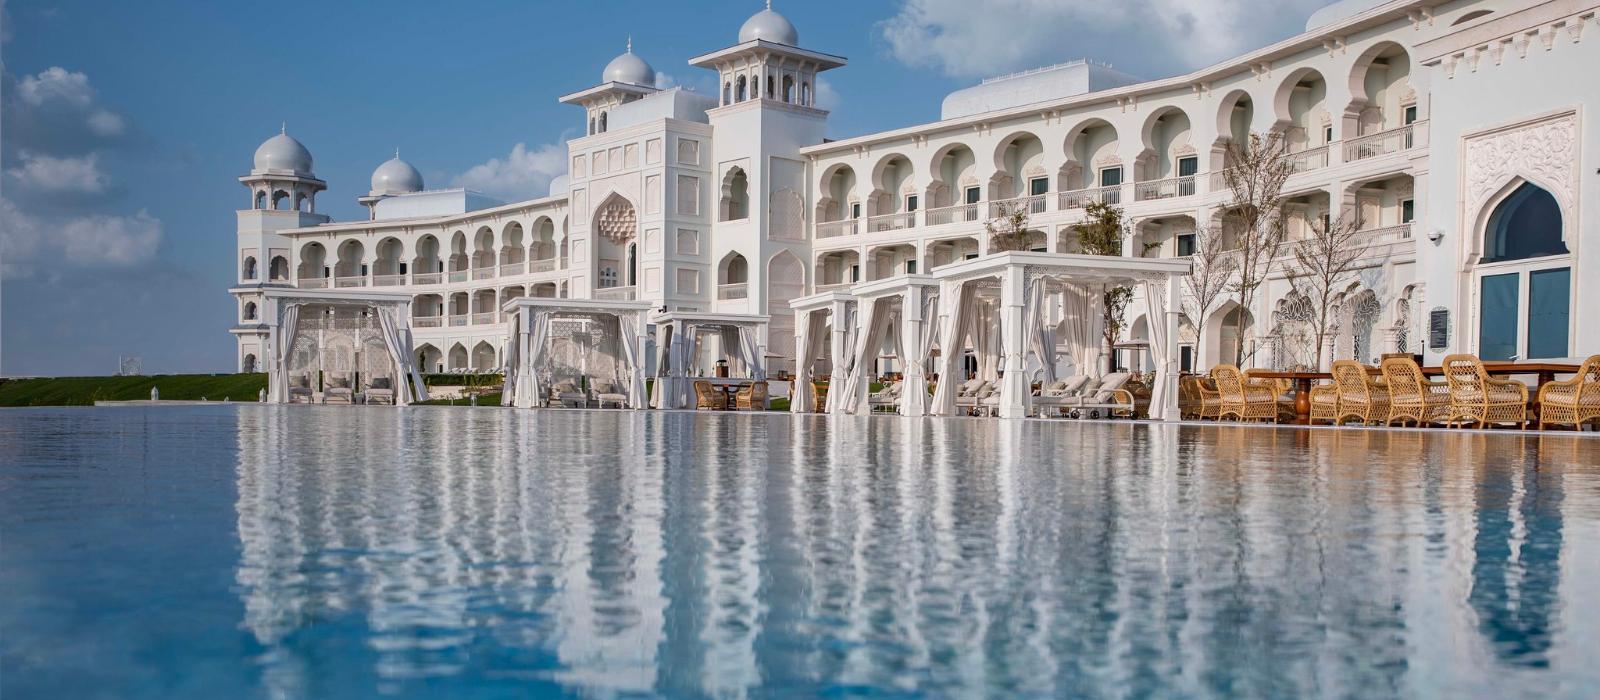 多哈卡塔拉澈笛度假酒店(The Chedi Katara Hotel and Resort) 图片  www.lhw.cn